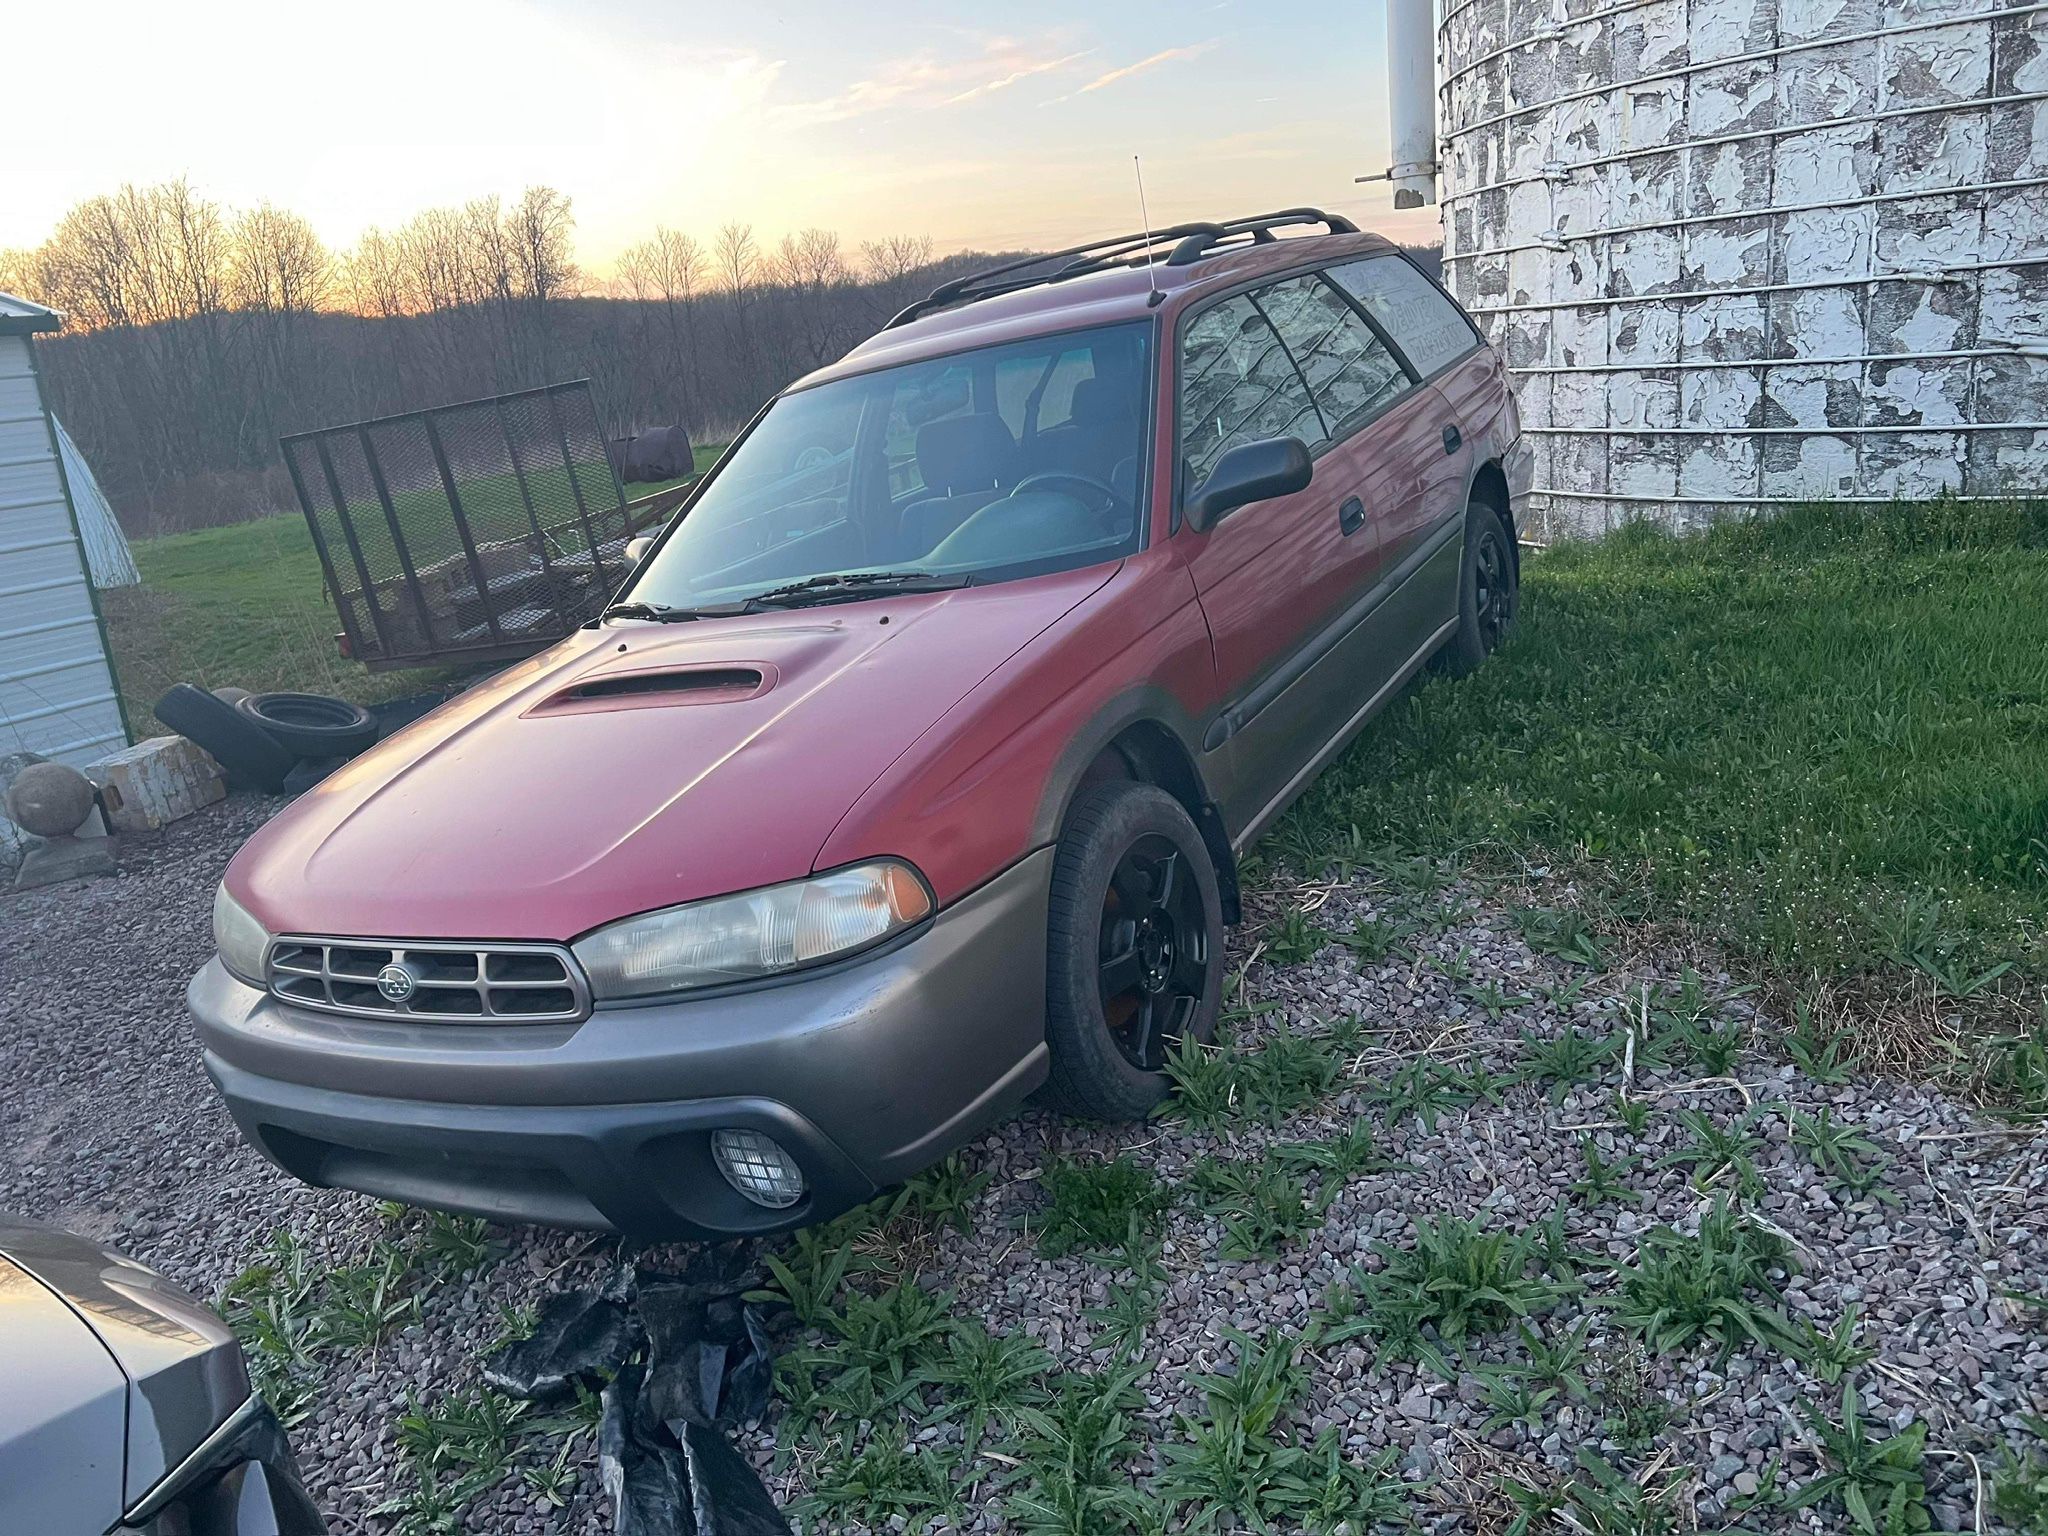 1996 Subaru Legacy Wagon